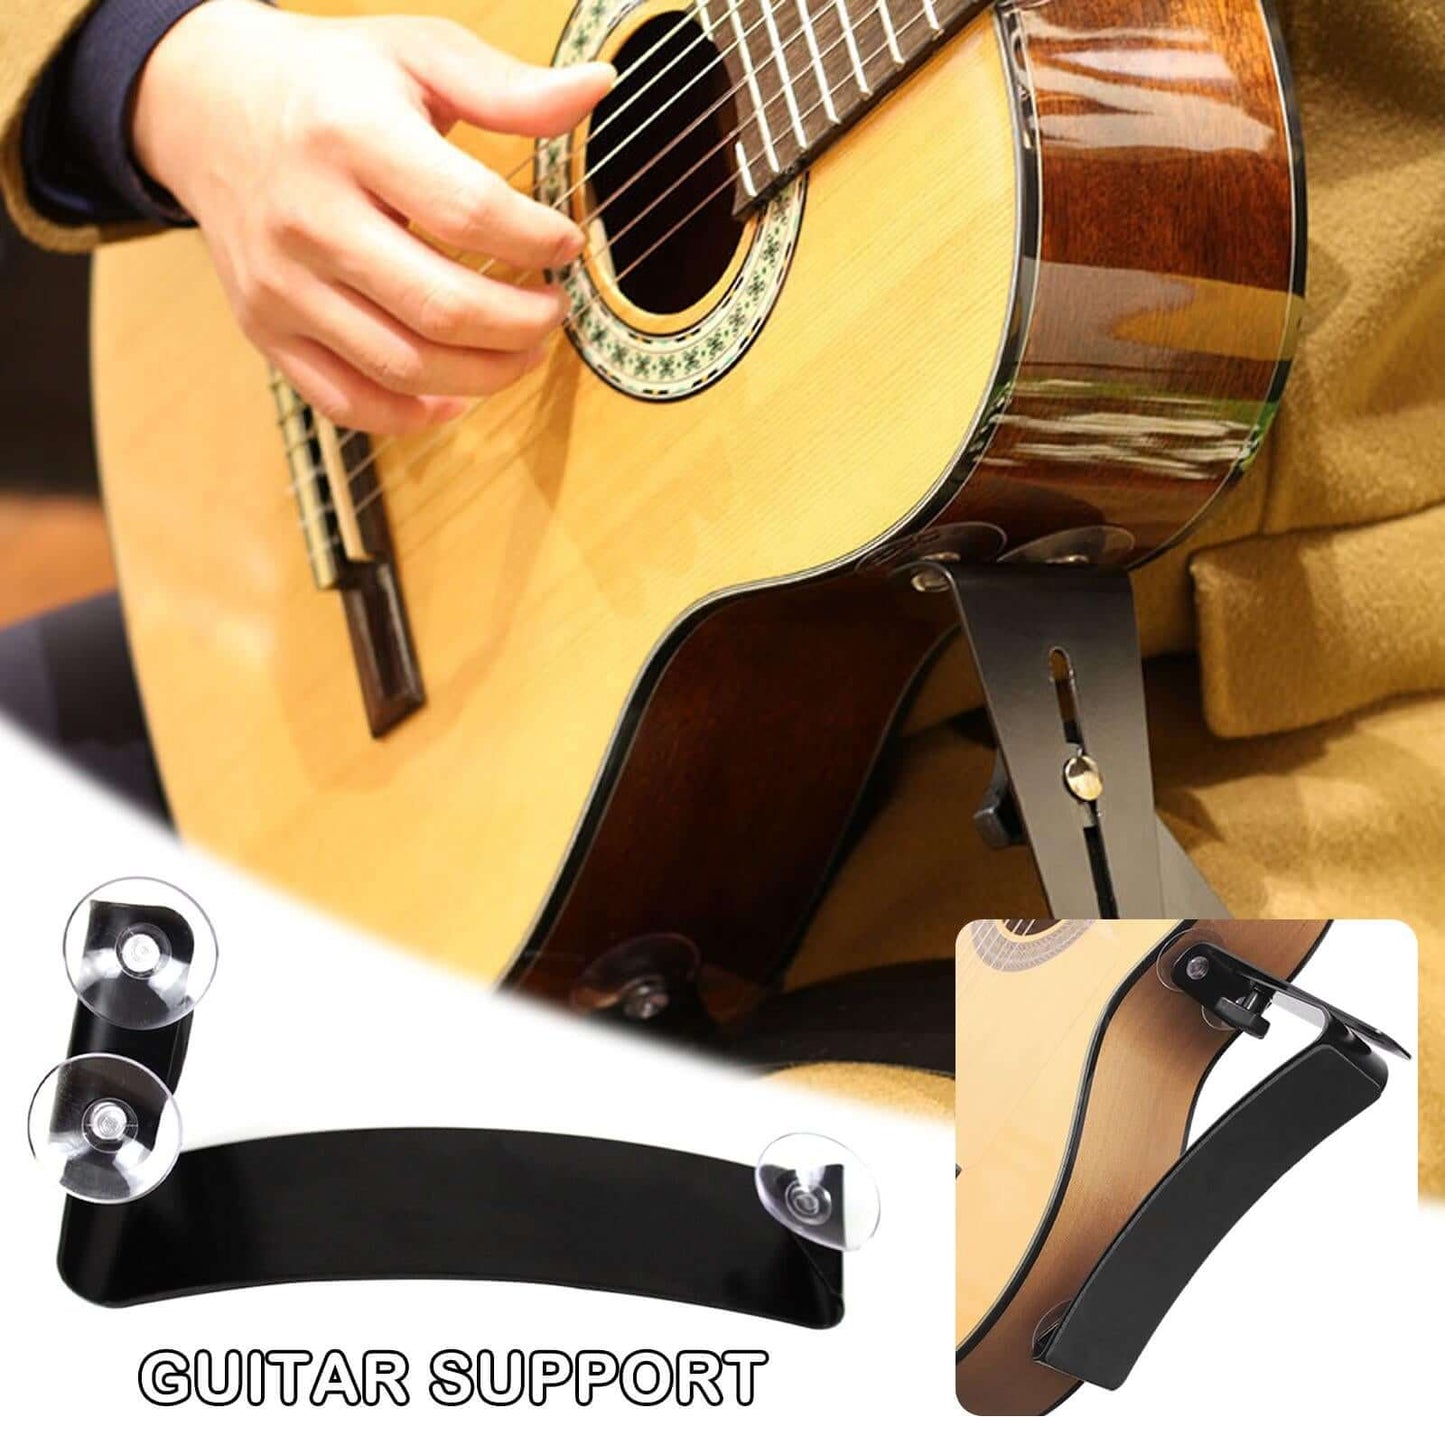 Guitar support for classical guitar guitarmetrics